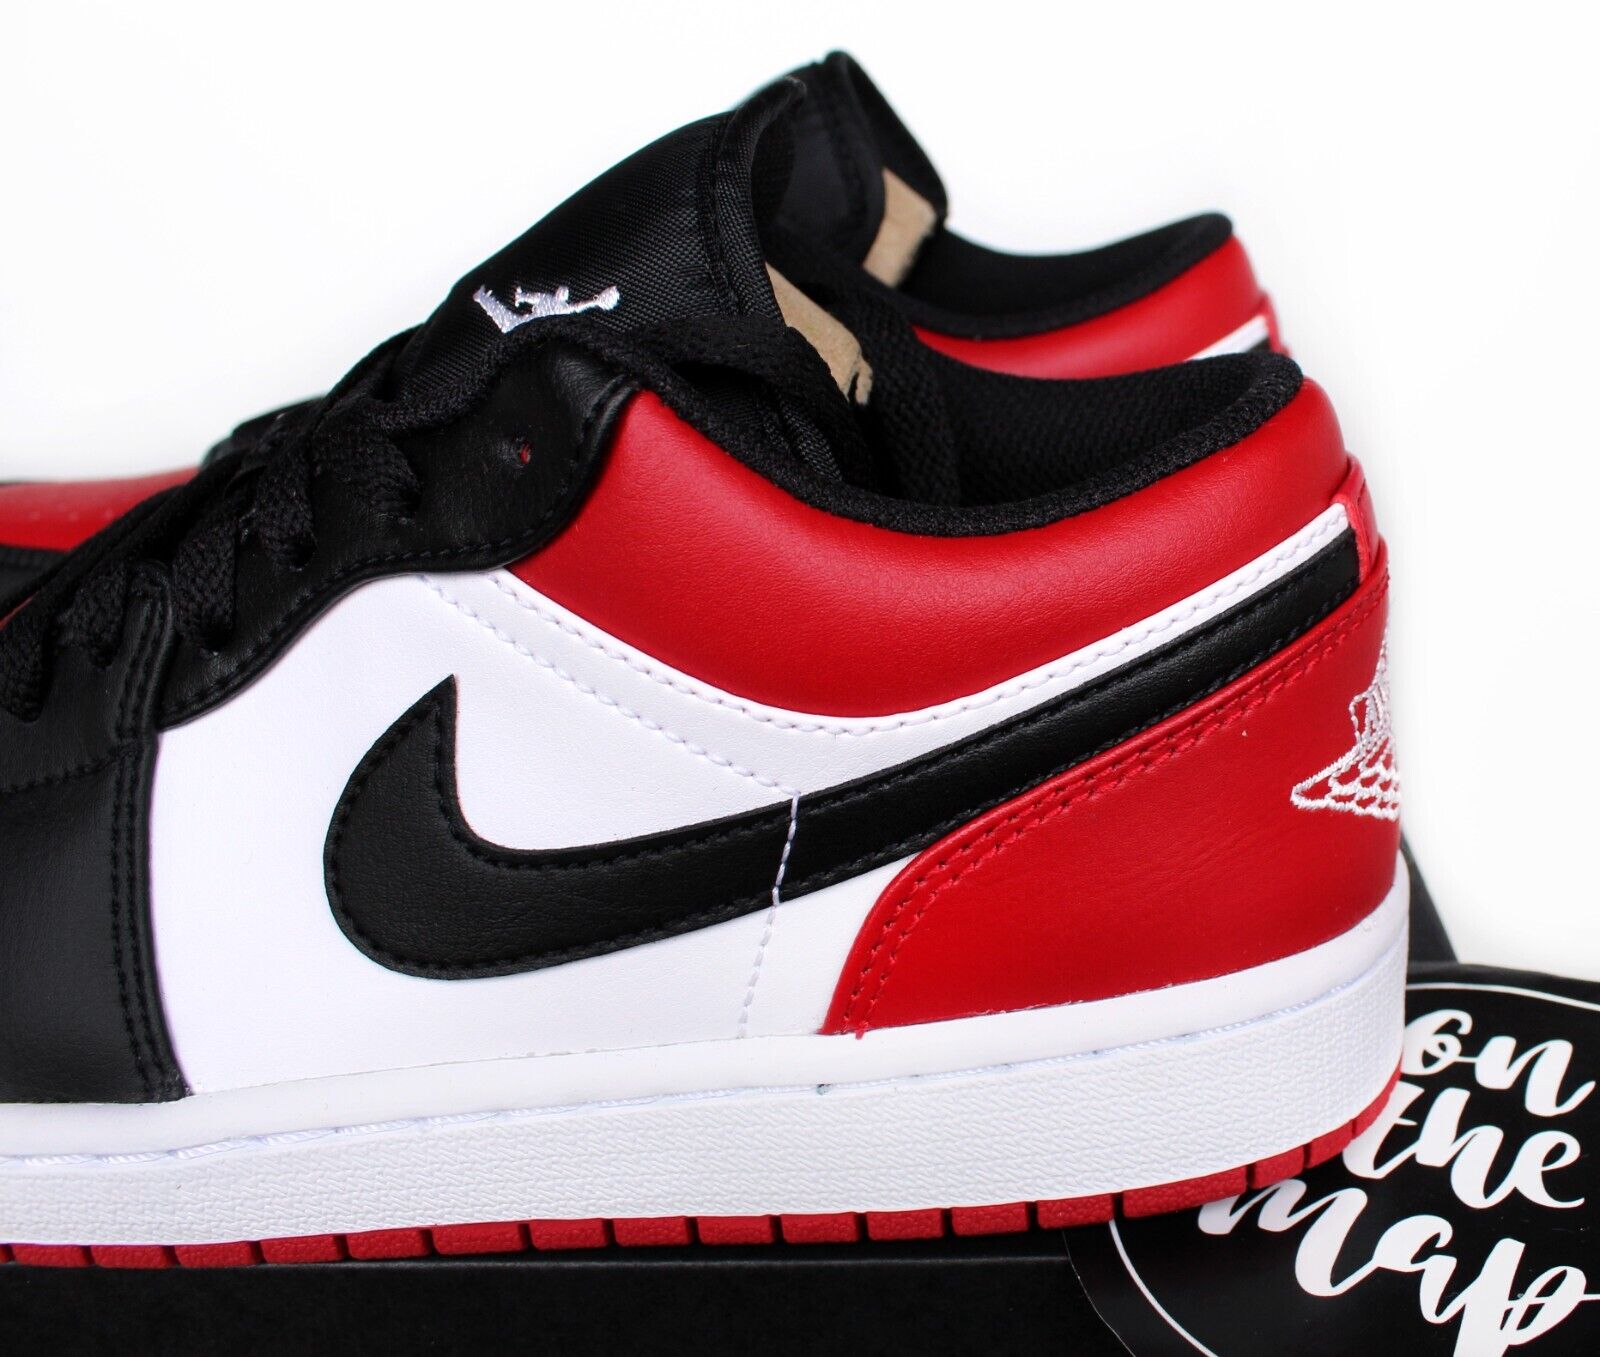 Nike Air Jordan 1 Retro Low Bred Toe Black Gym Red White UK 5 6 7 